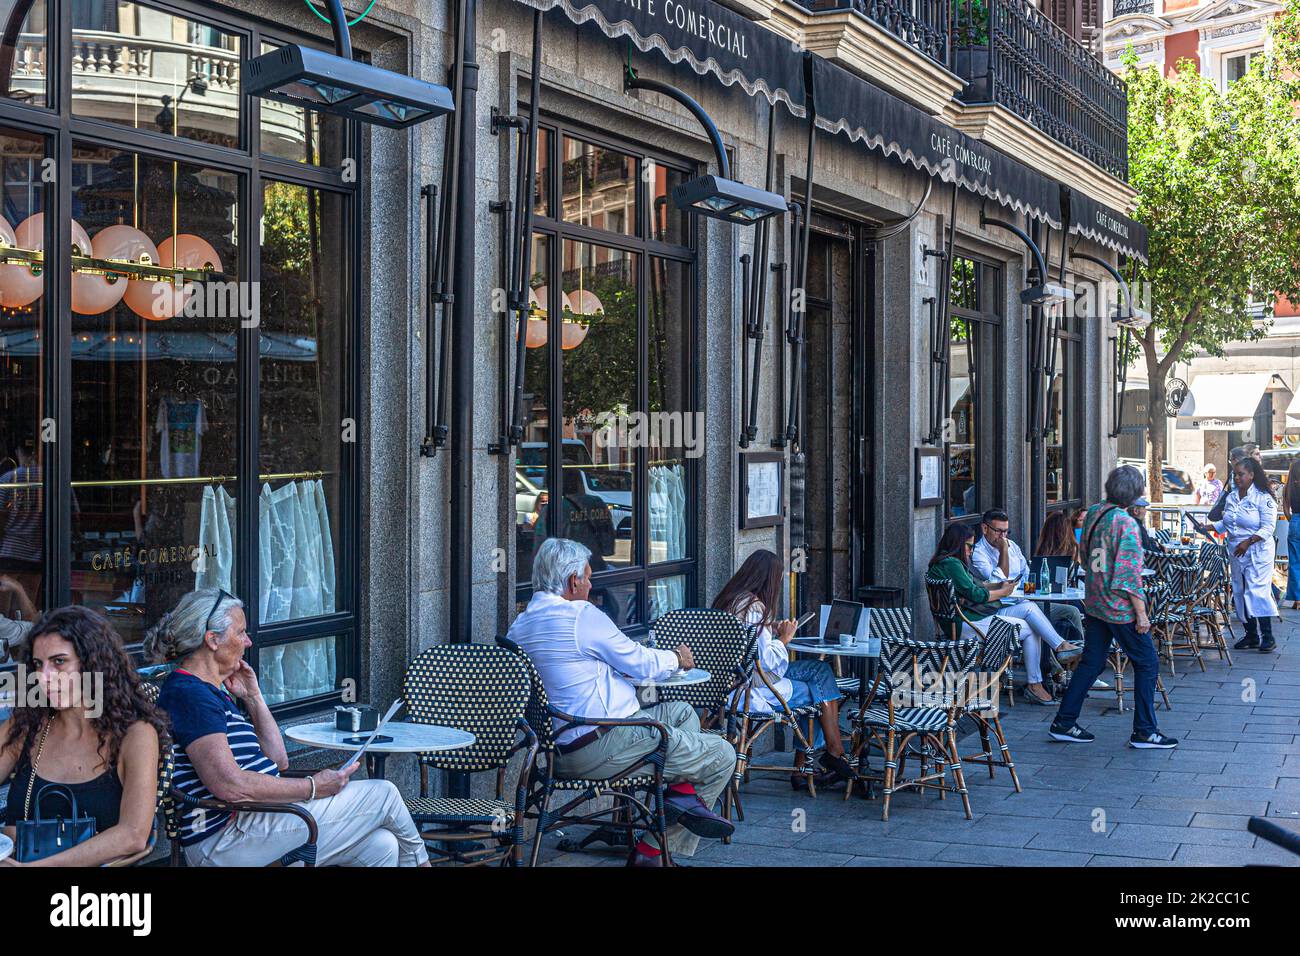 Café Comercial terrace, Plaza Bilbao, Madrid, Spain. Stock Photo